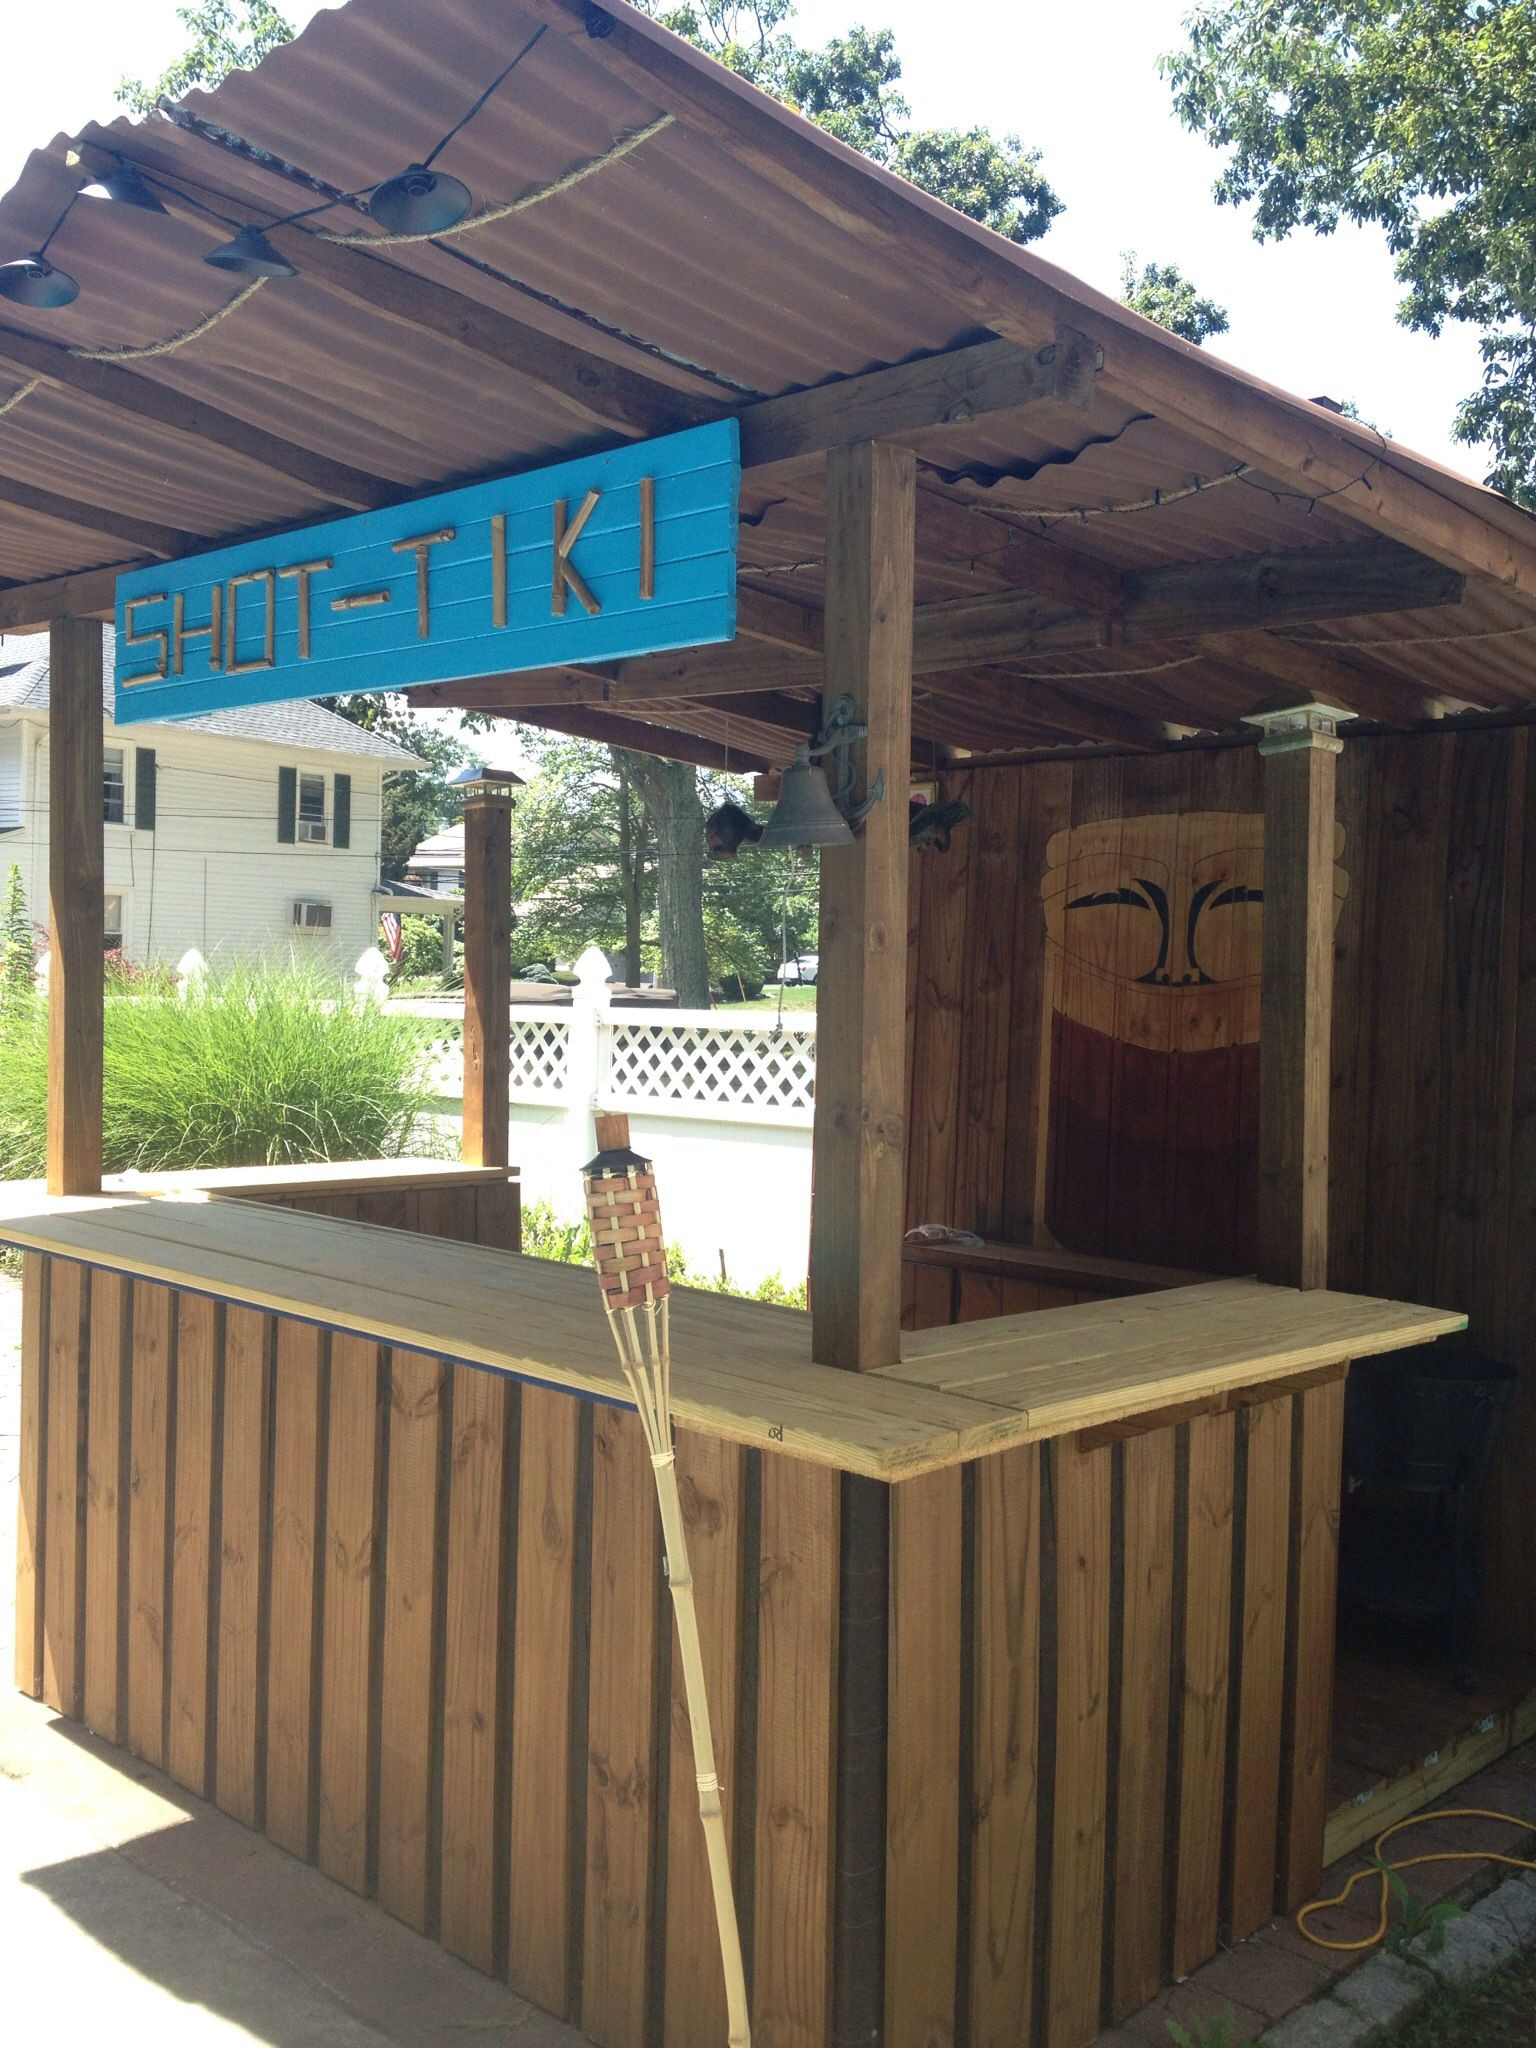 Tiki Backyard Ideas
 Outdoor Tiki Bar Ideas